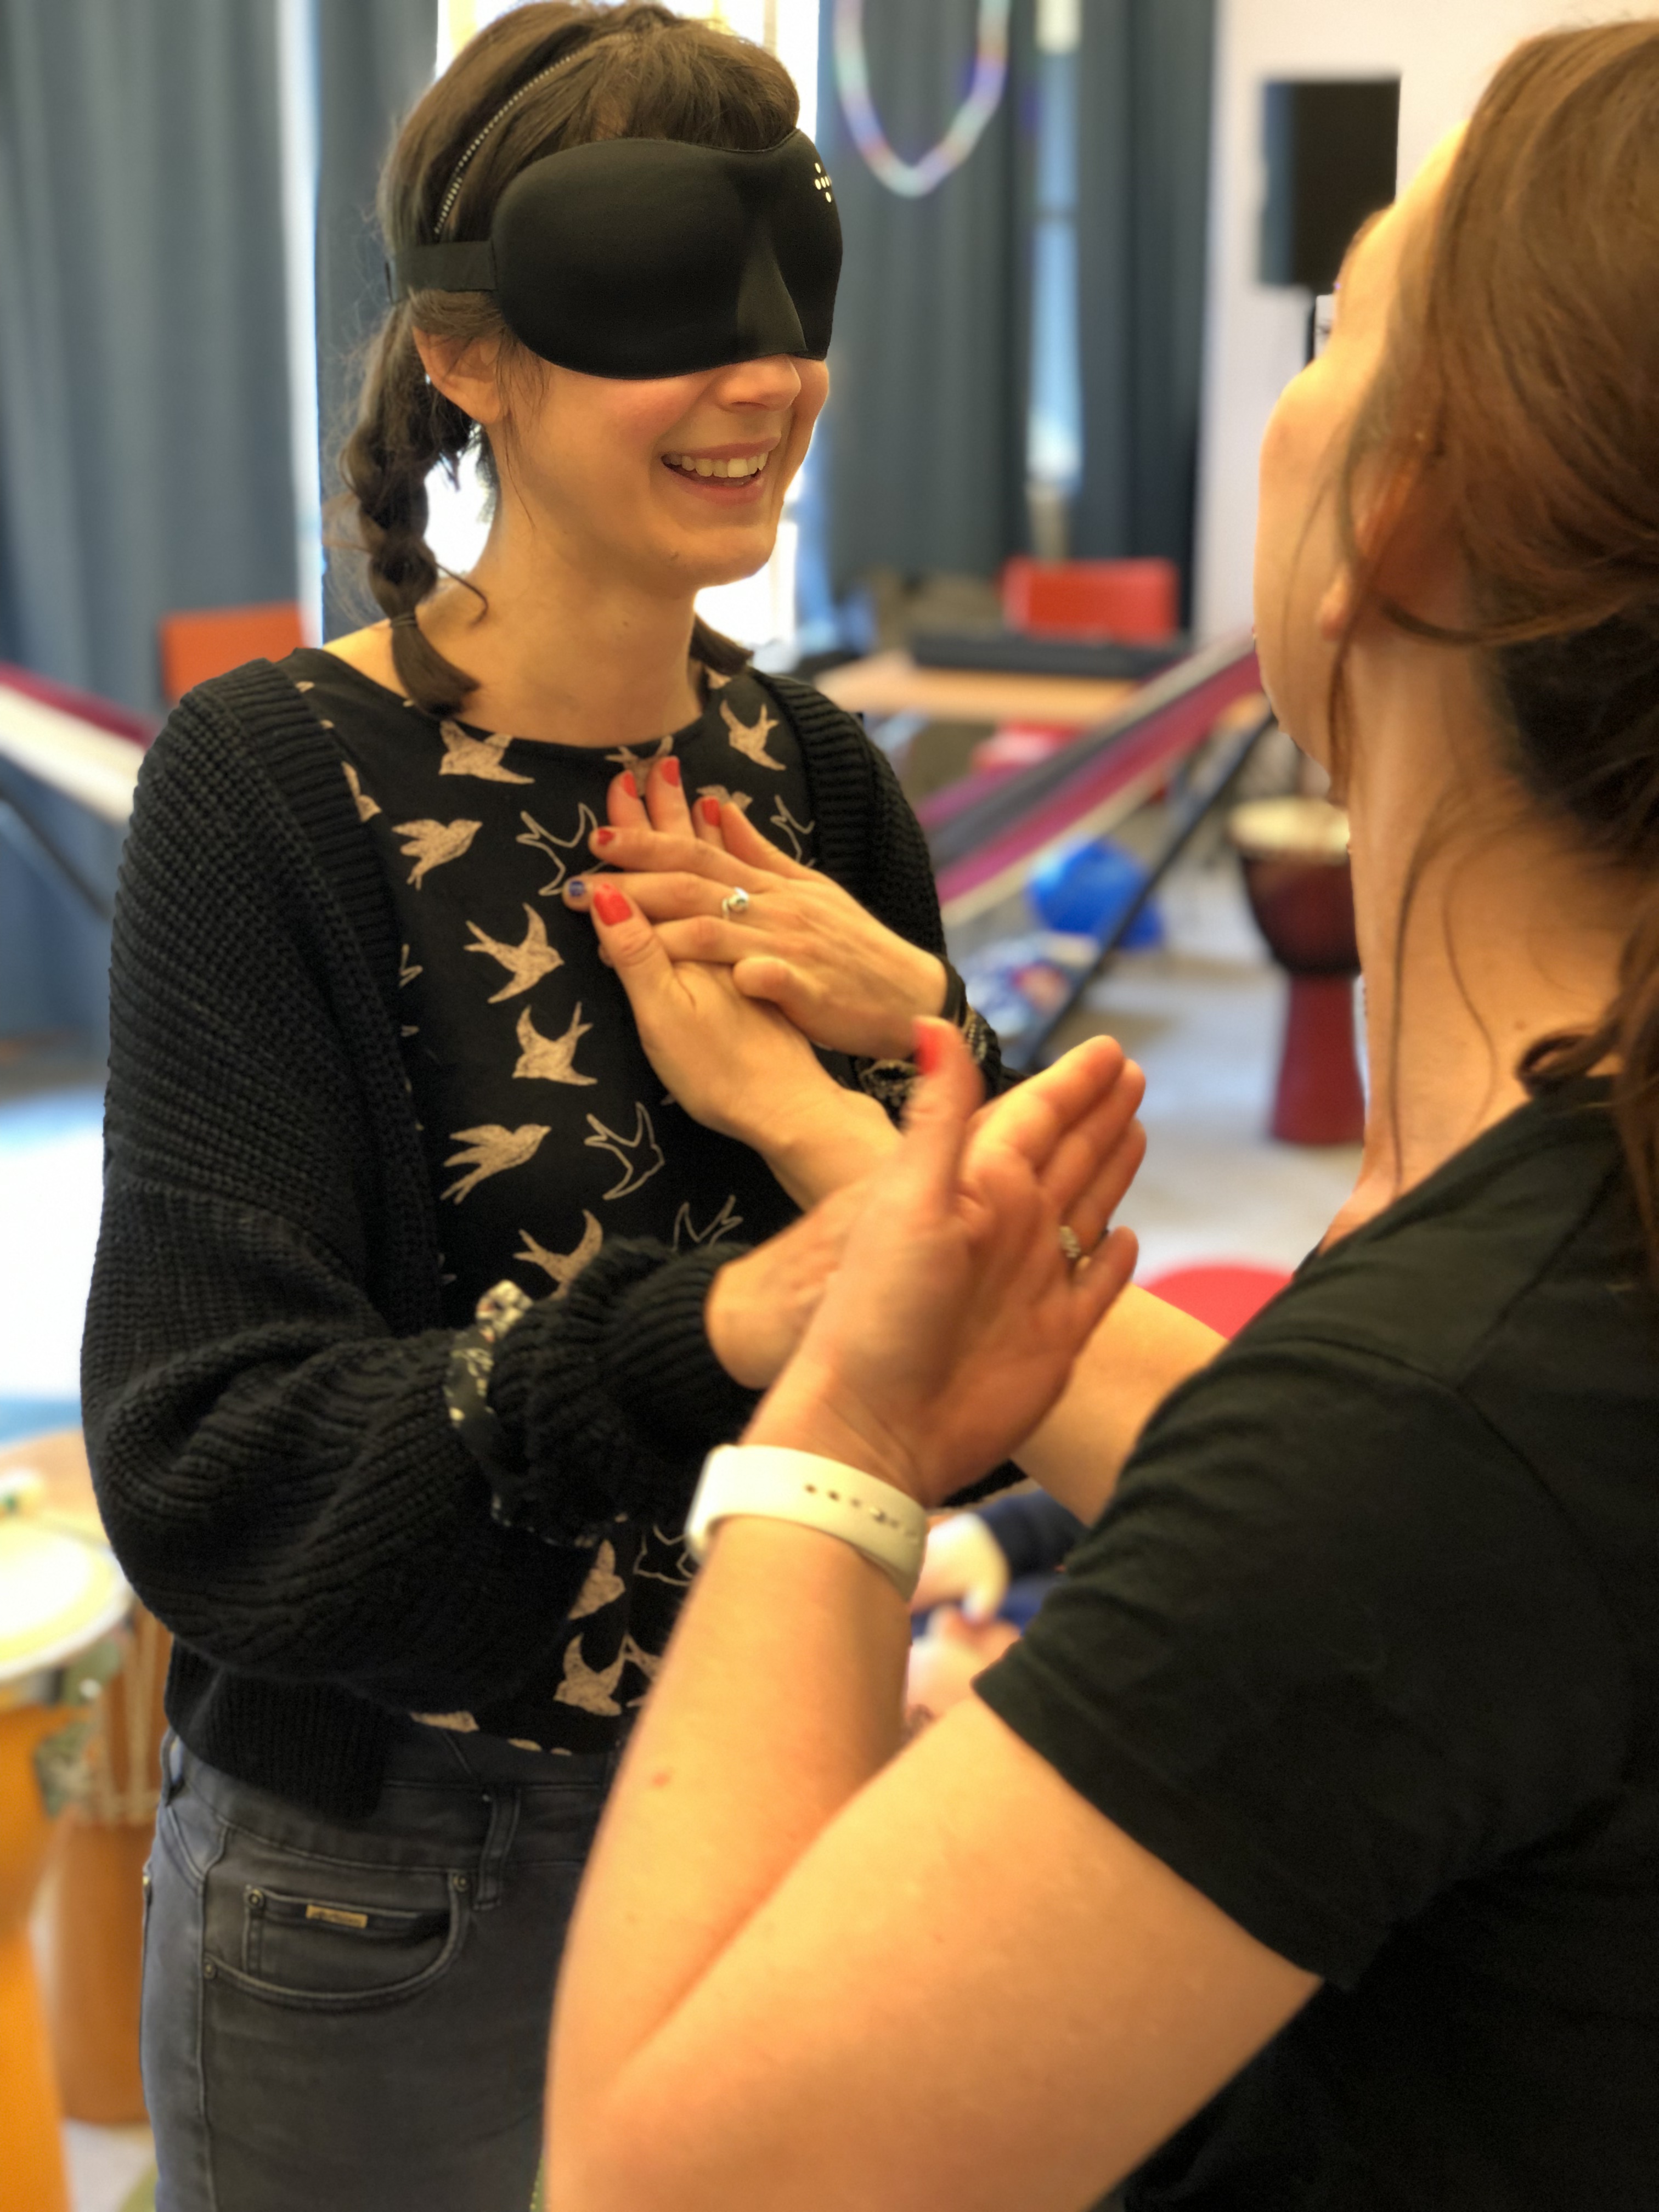 En kvinne med bind for øynene prøver taktil berøring 